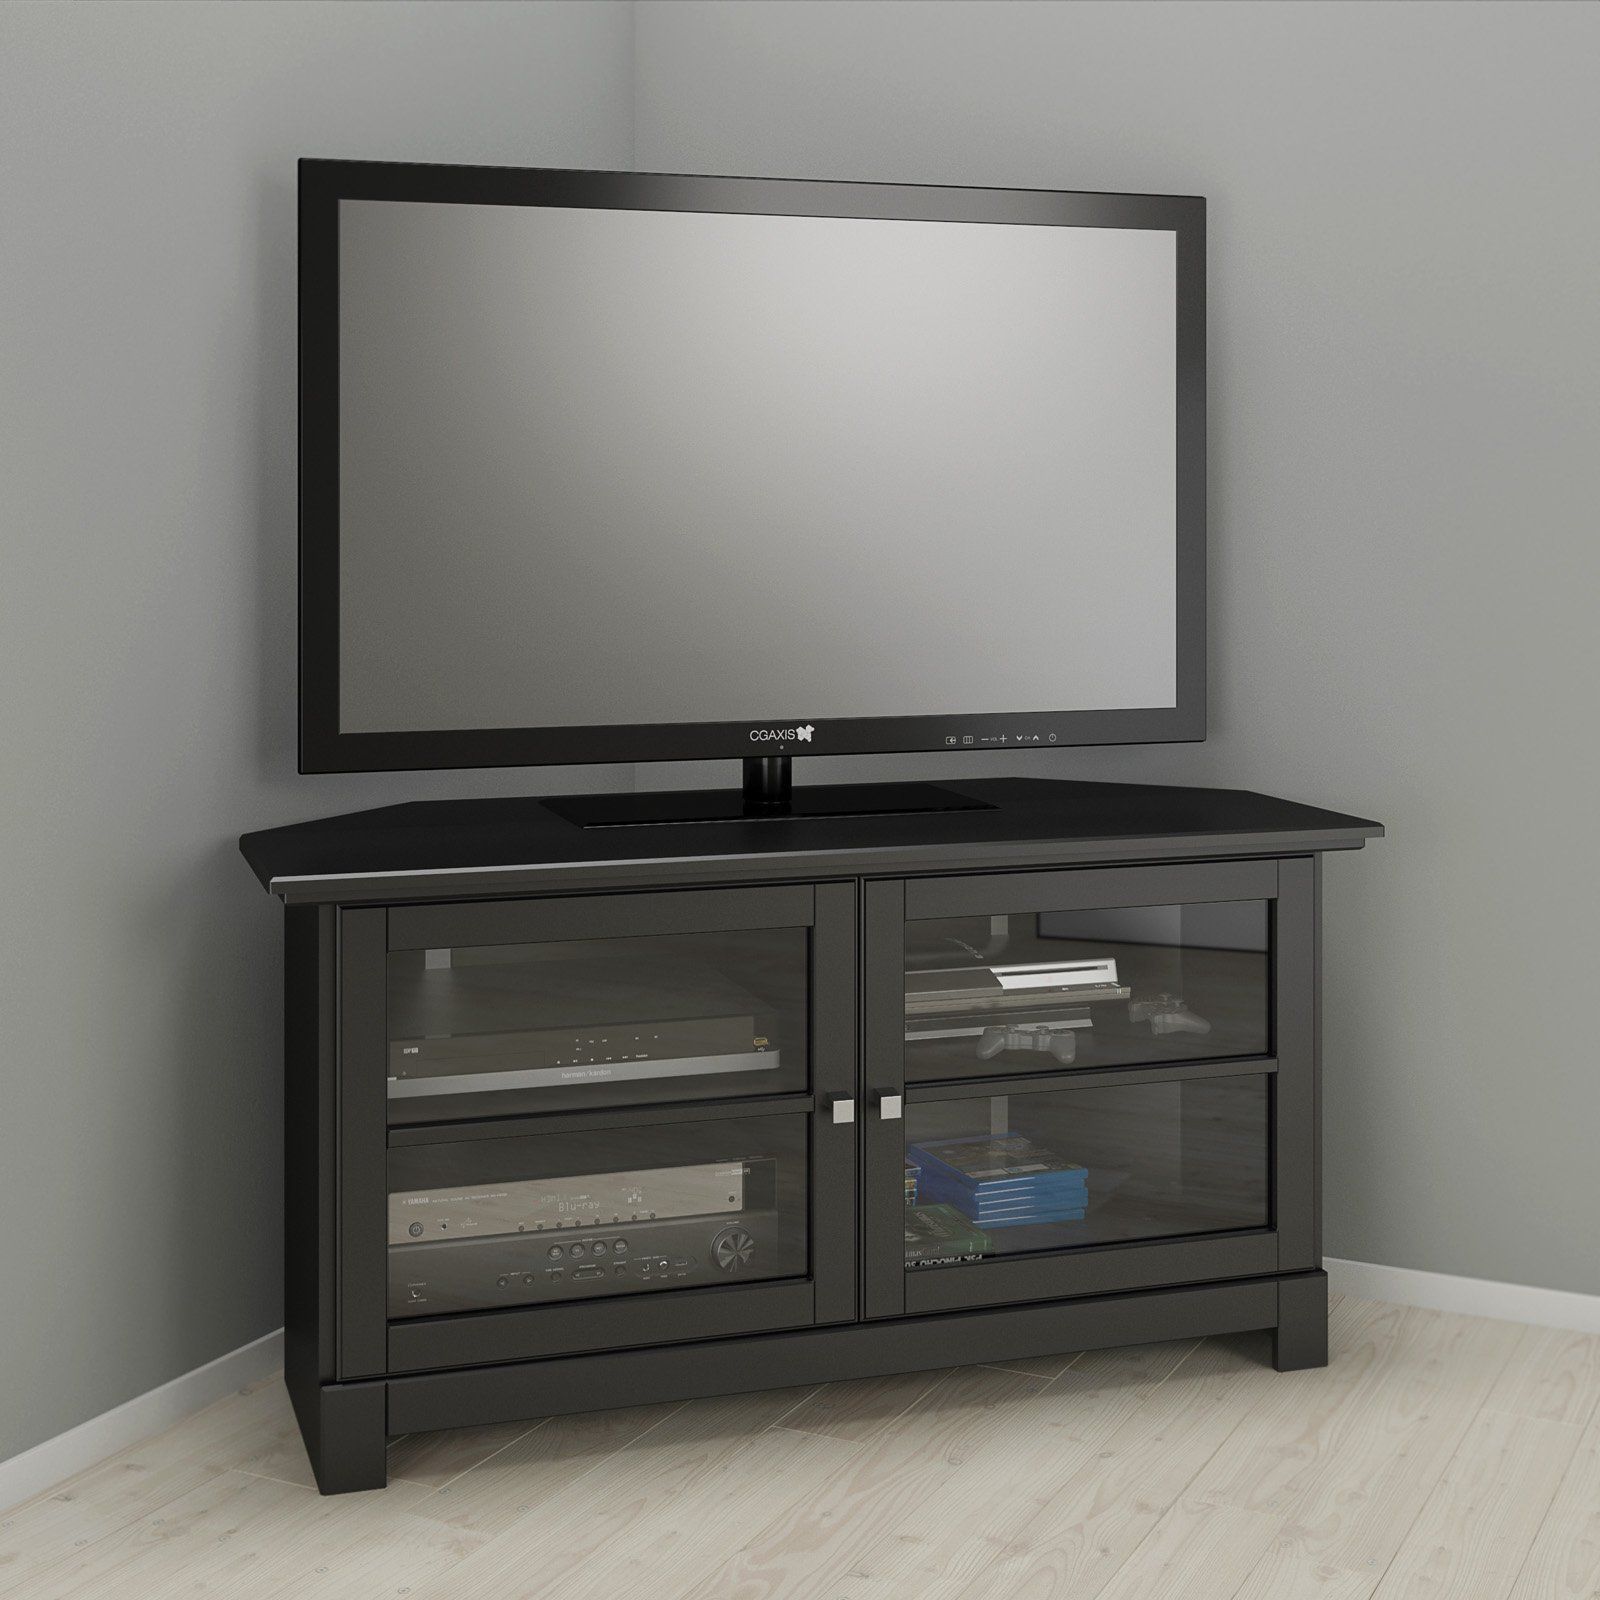 Nexera Pinnacle 49 In. 2 Door Corner Tv Stand – Black With Regard To Modern Tv Stands In Oak Wood And Black Accents With Storage Doors (Photo 2 of 15)